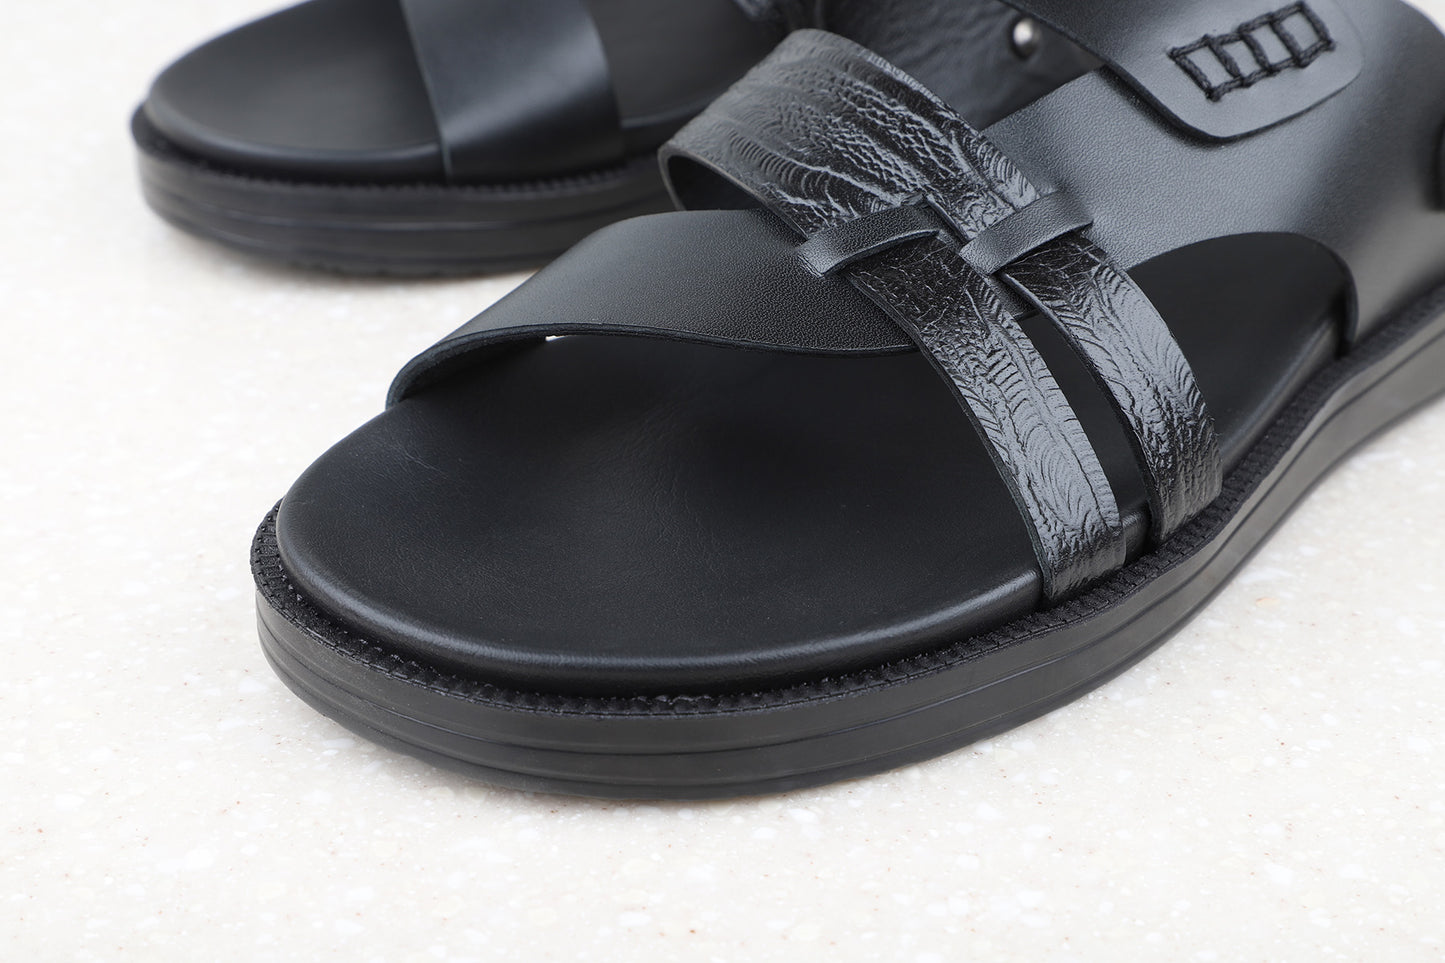 Atesber Black Comfort Sandals For Men